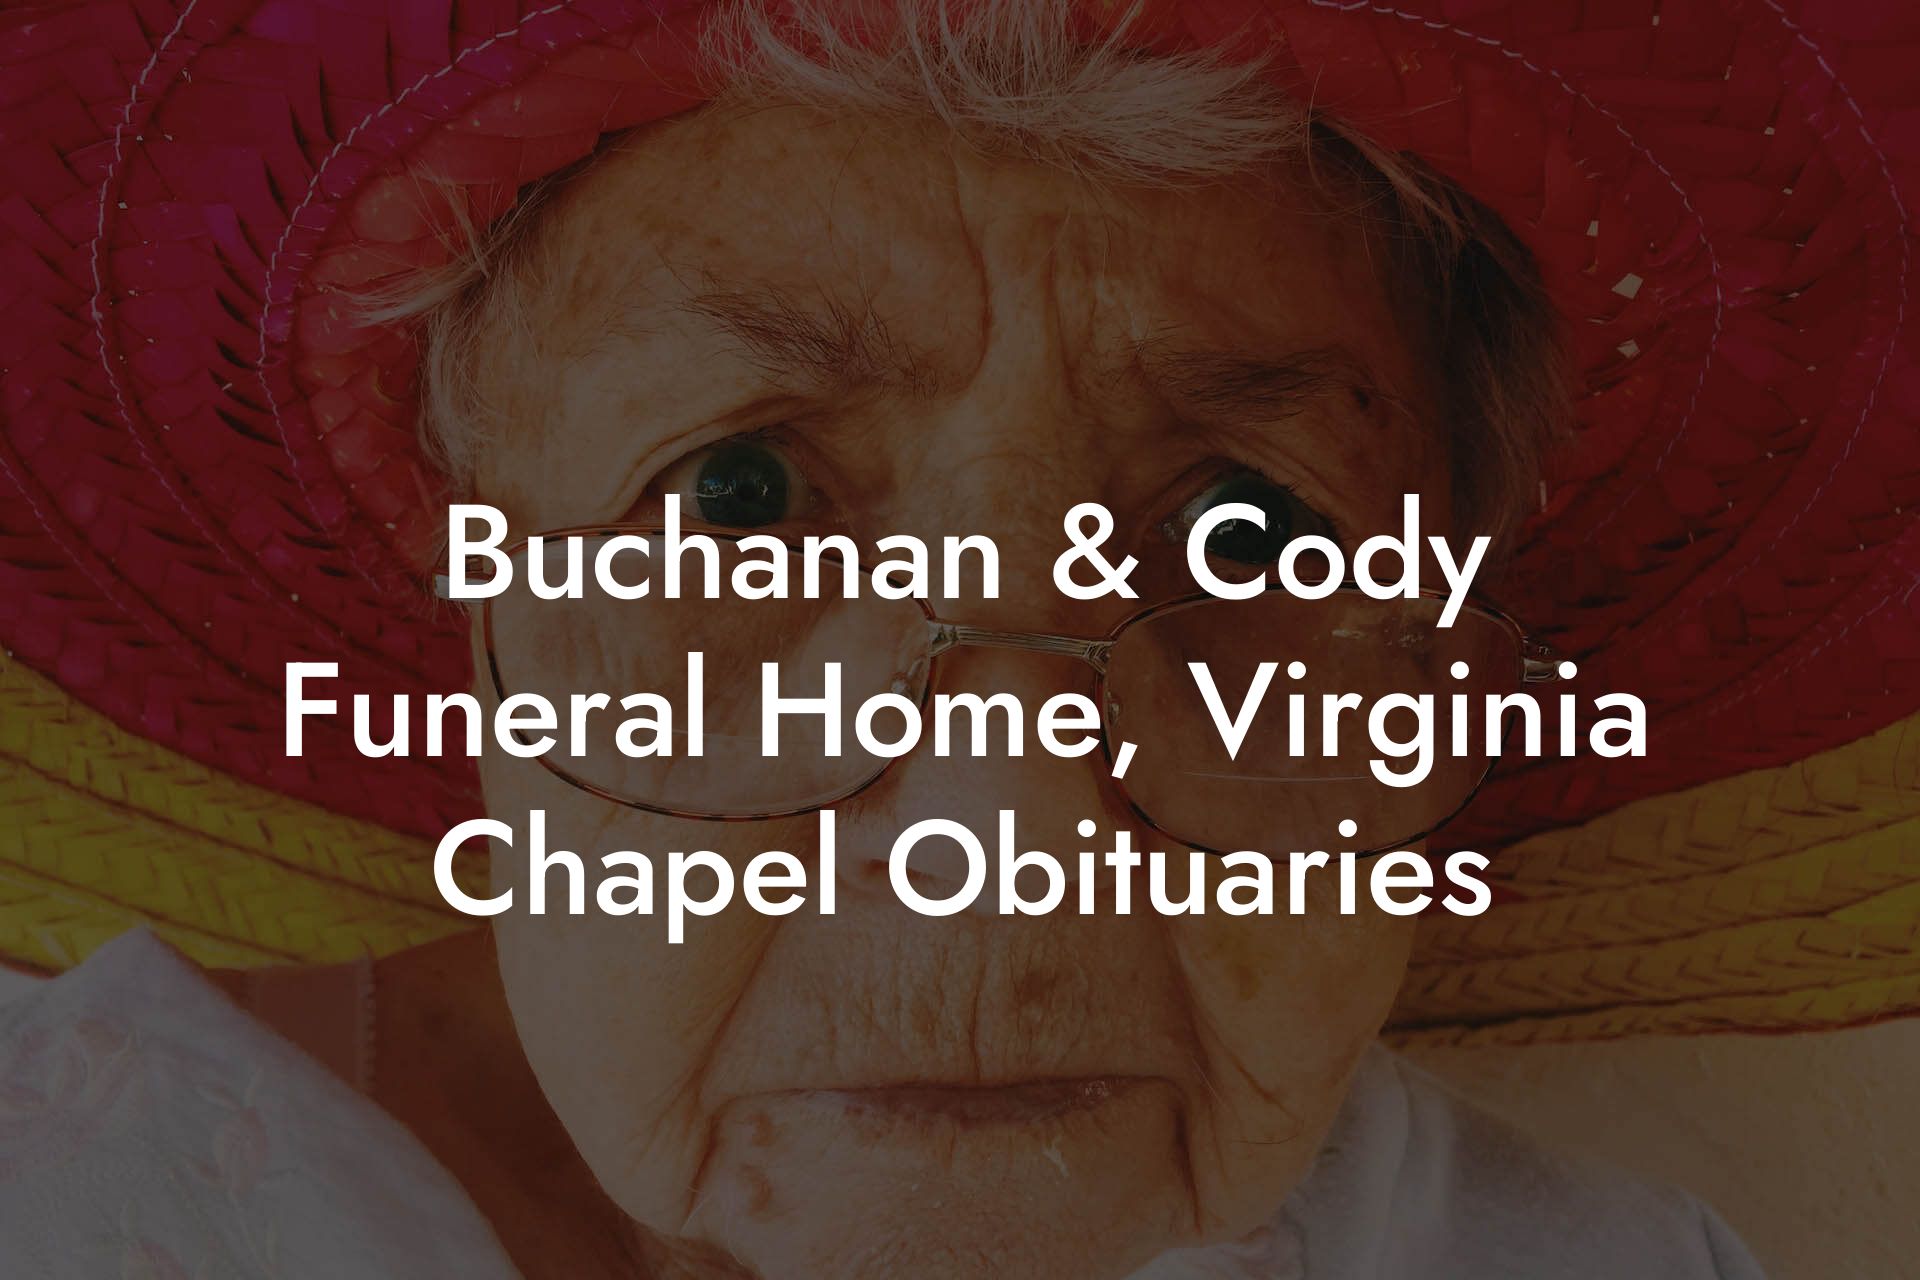 Buchanan & Cody Funeral Home, Virginia Chapel Obituaries